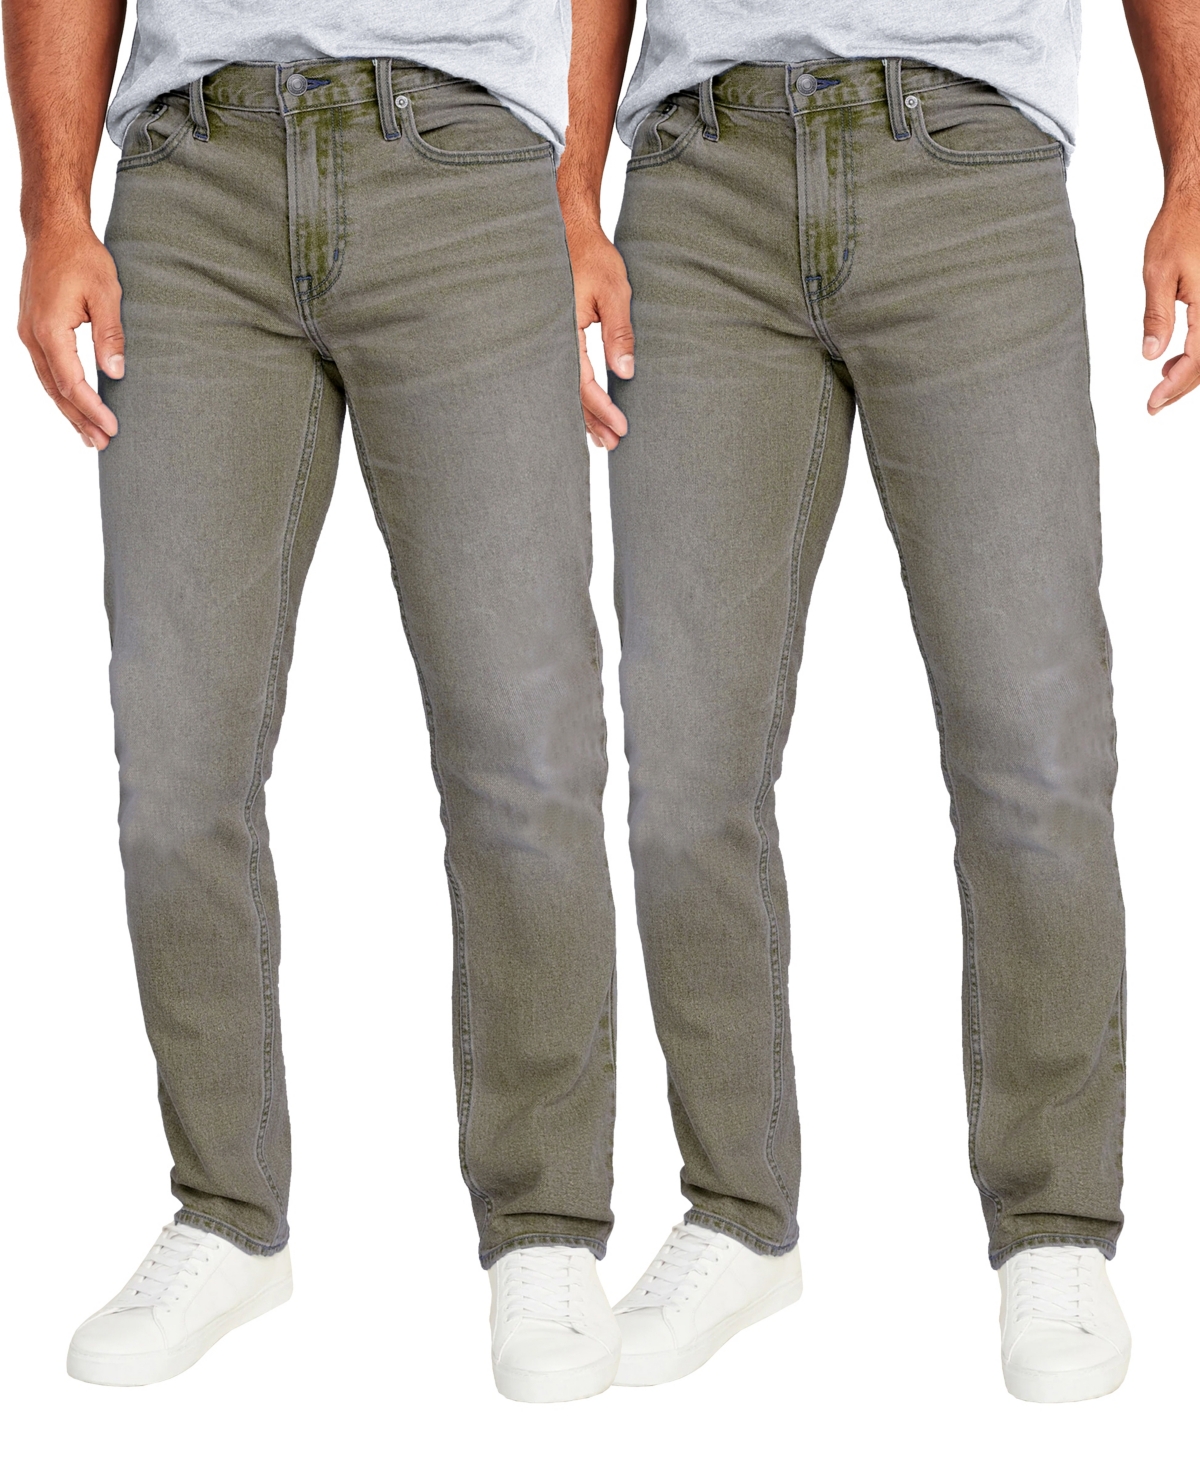 Men's Flex Stretch Slim Straight Jeans, Pack of 2 - Gray